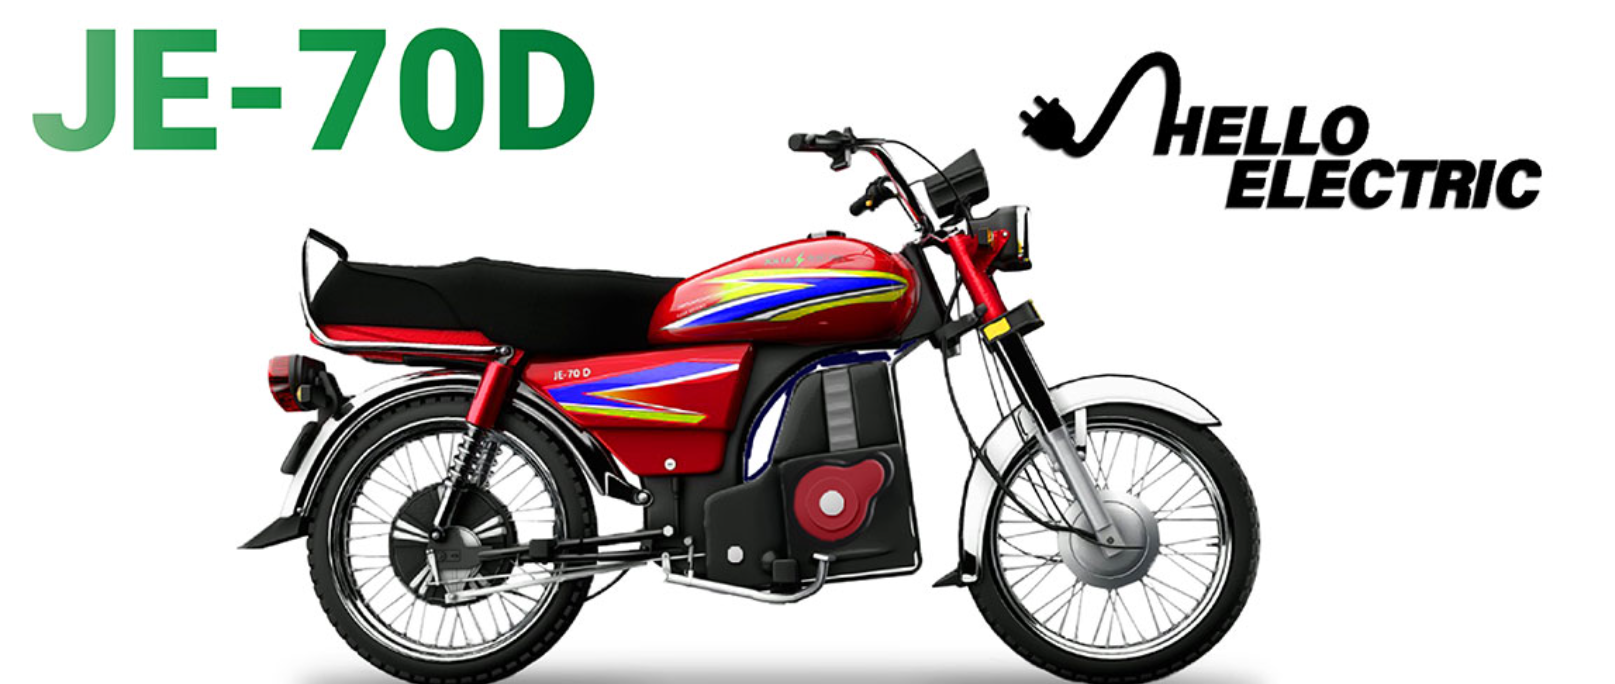 Promote electric bikes in Pakistan